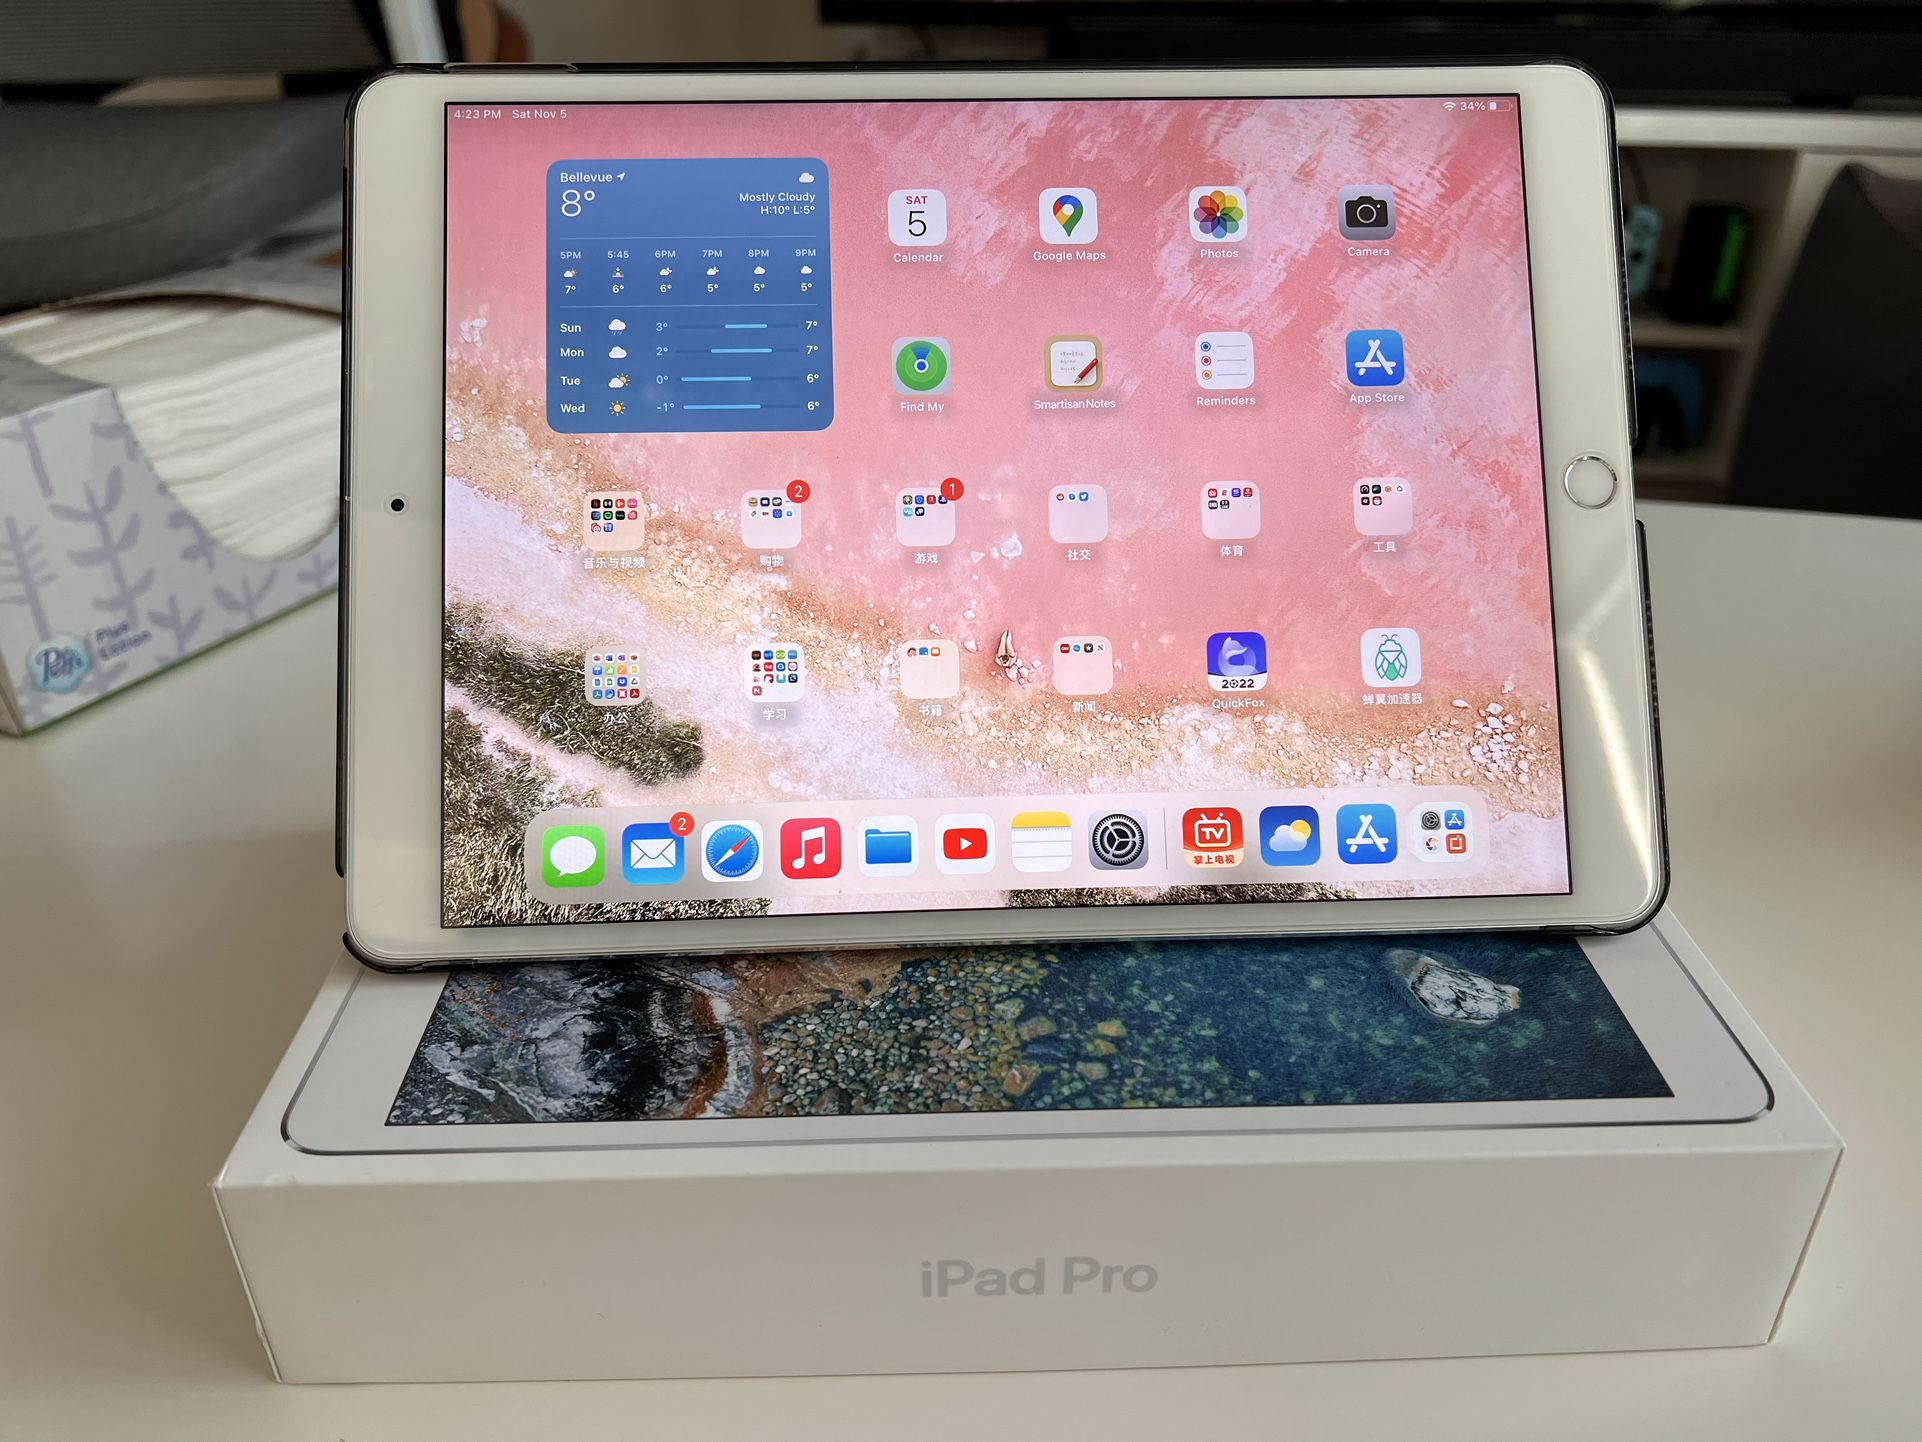 iPad Pro 10.5 Inch 64 GB - Silver - Like New